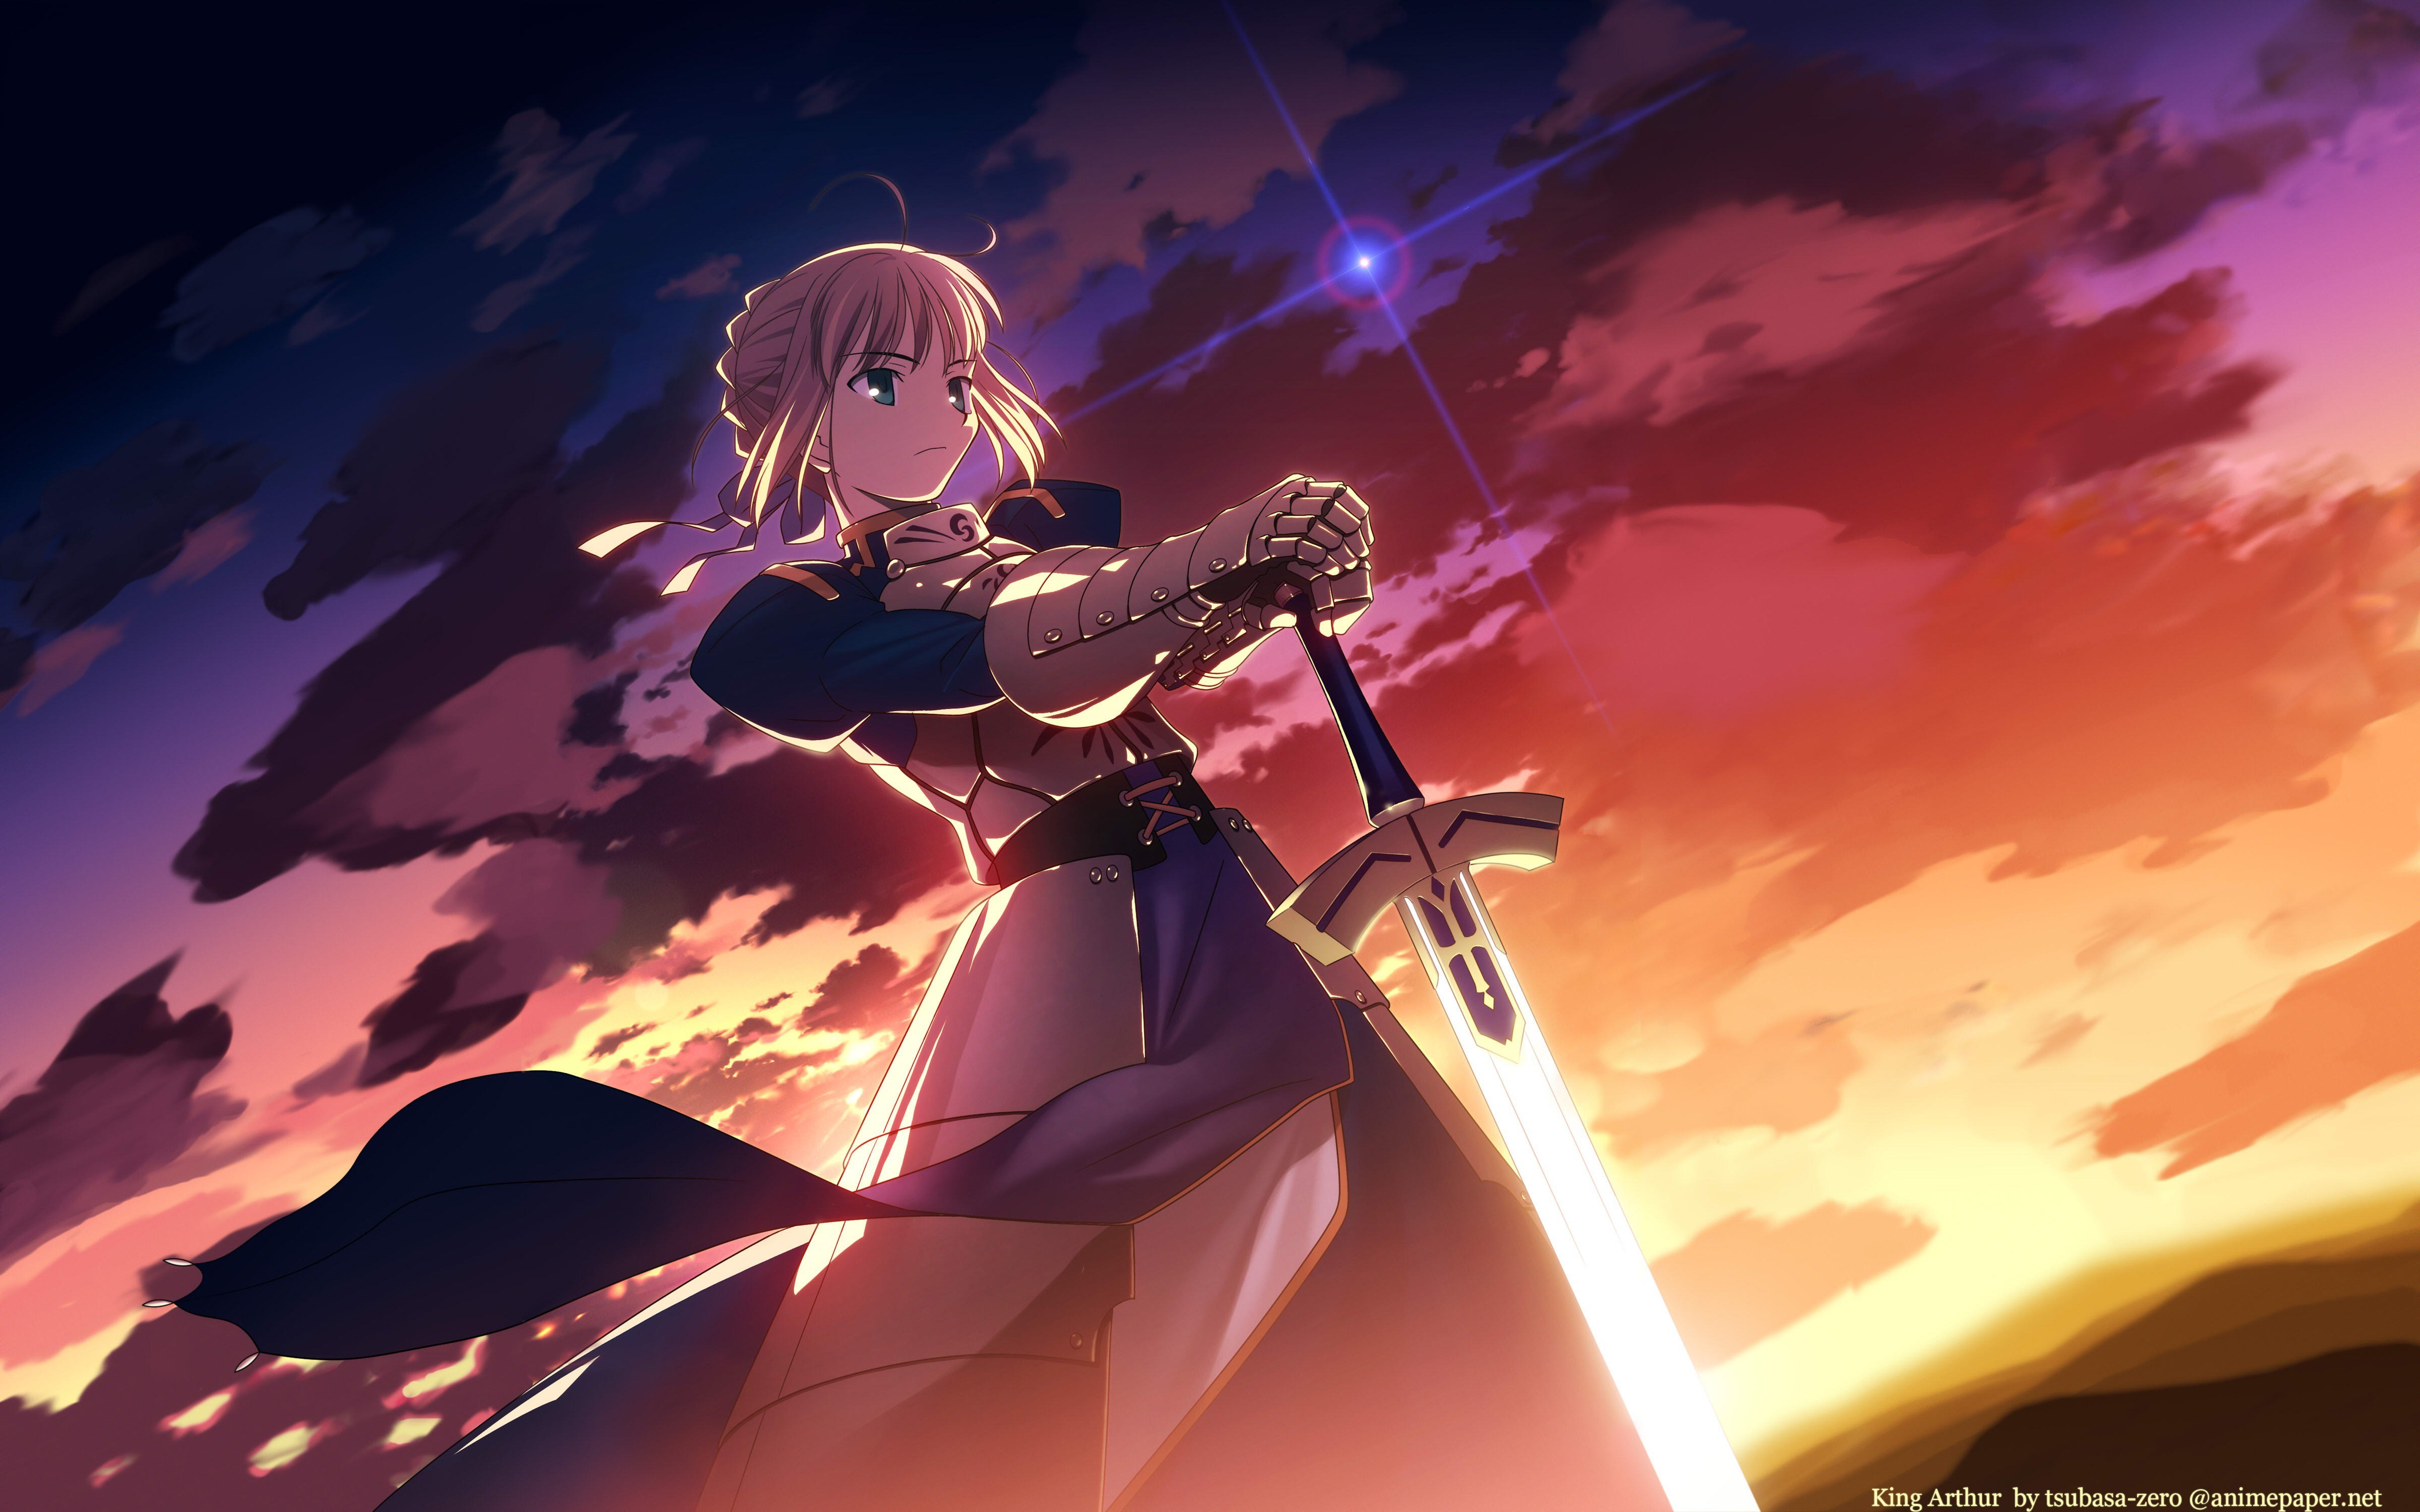 Anime 4800x3000 anime girls anime Fate series Saber women with swords sword sky standing armor